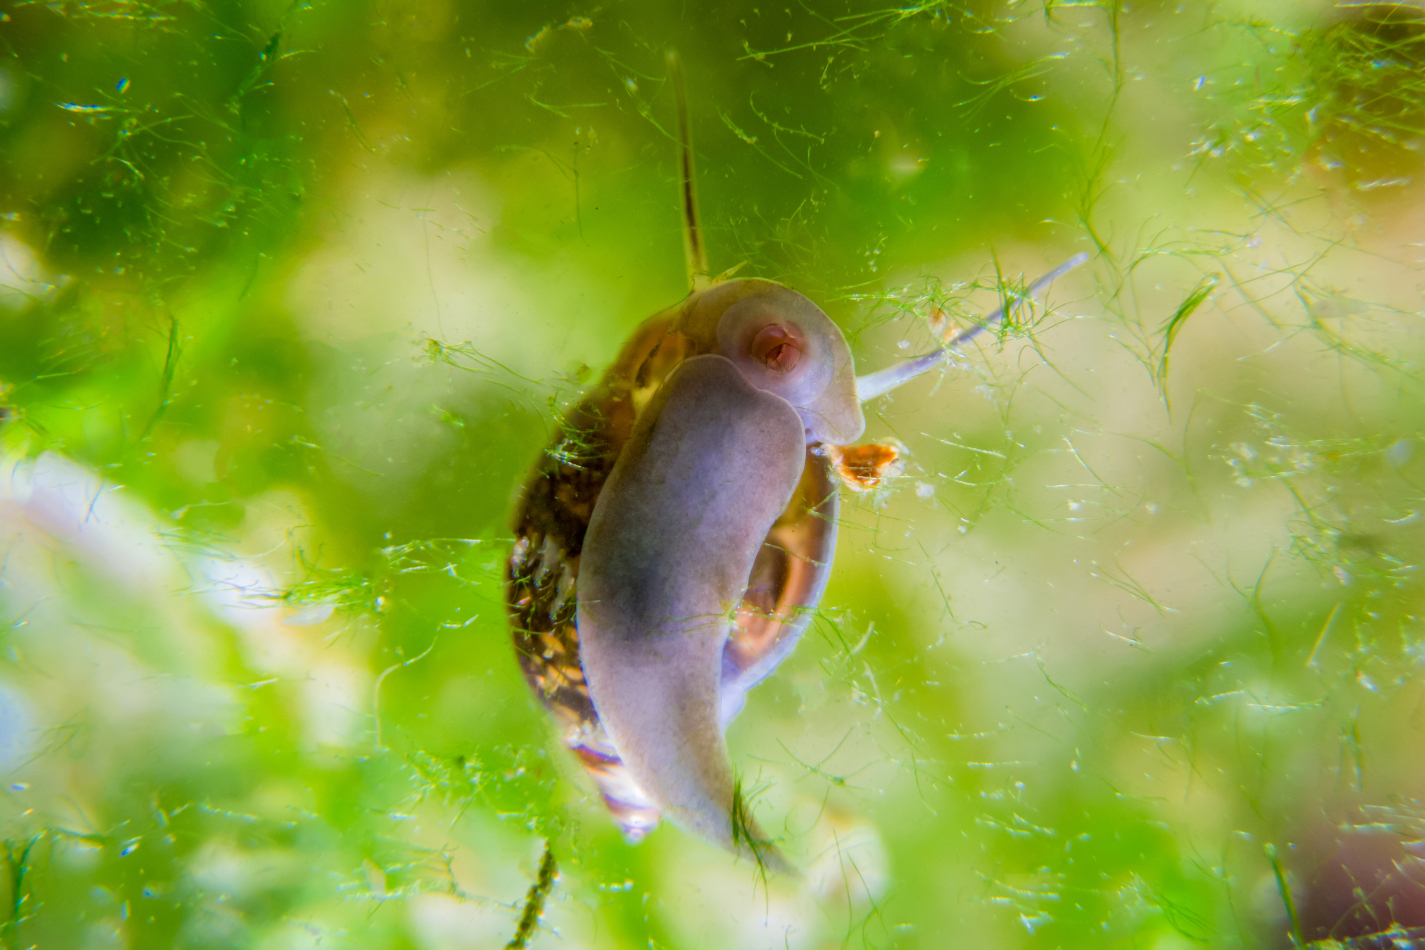 Bladder Snails Breeding